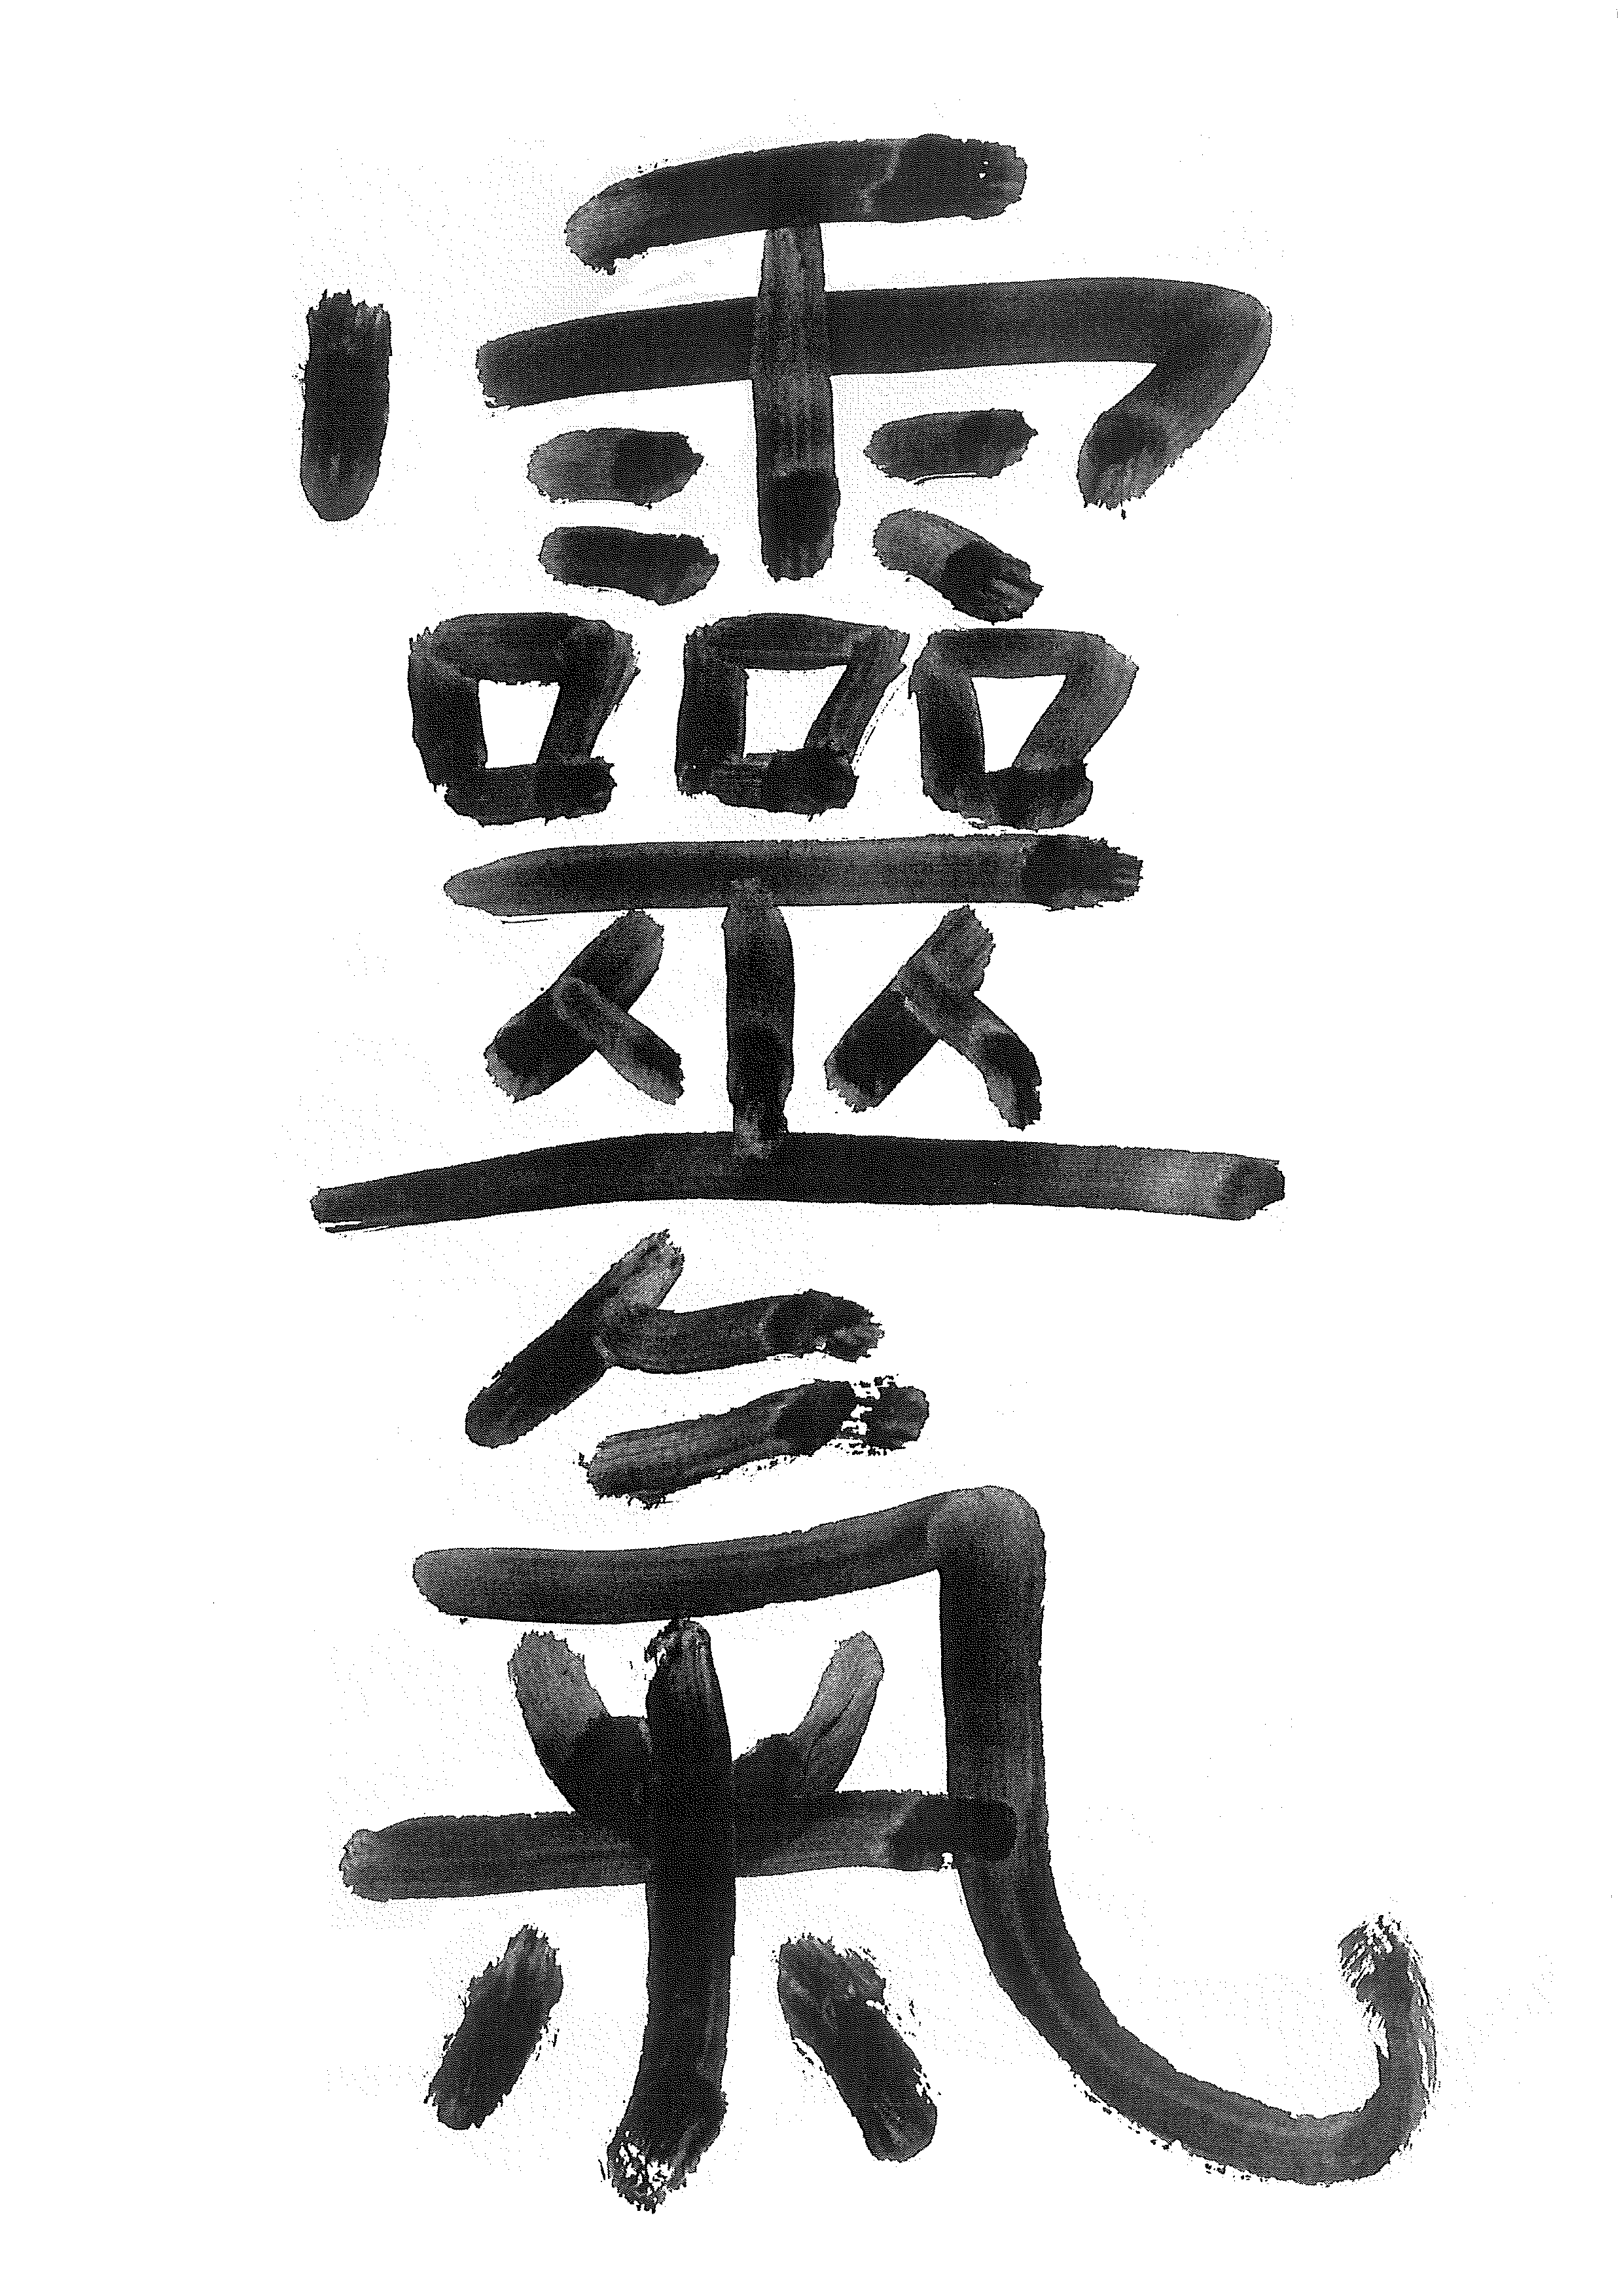 Reiki-Symbol
Kalligraphie by Ulf Straßburger